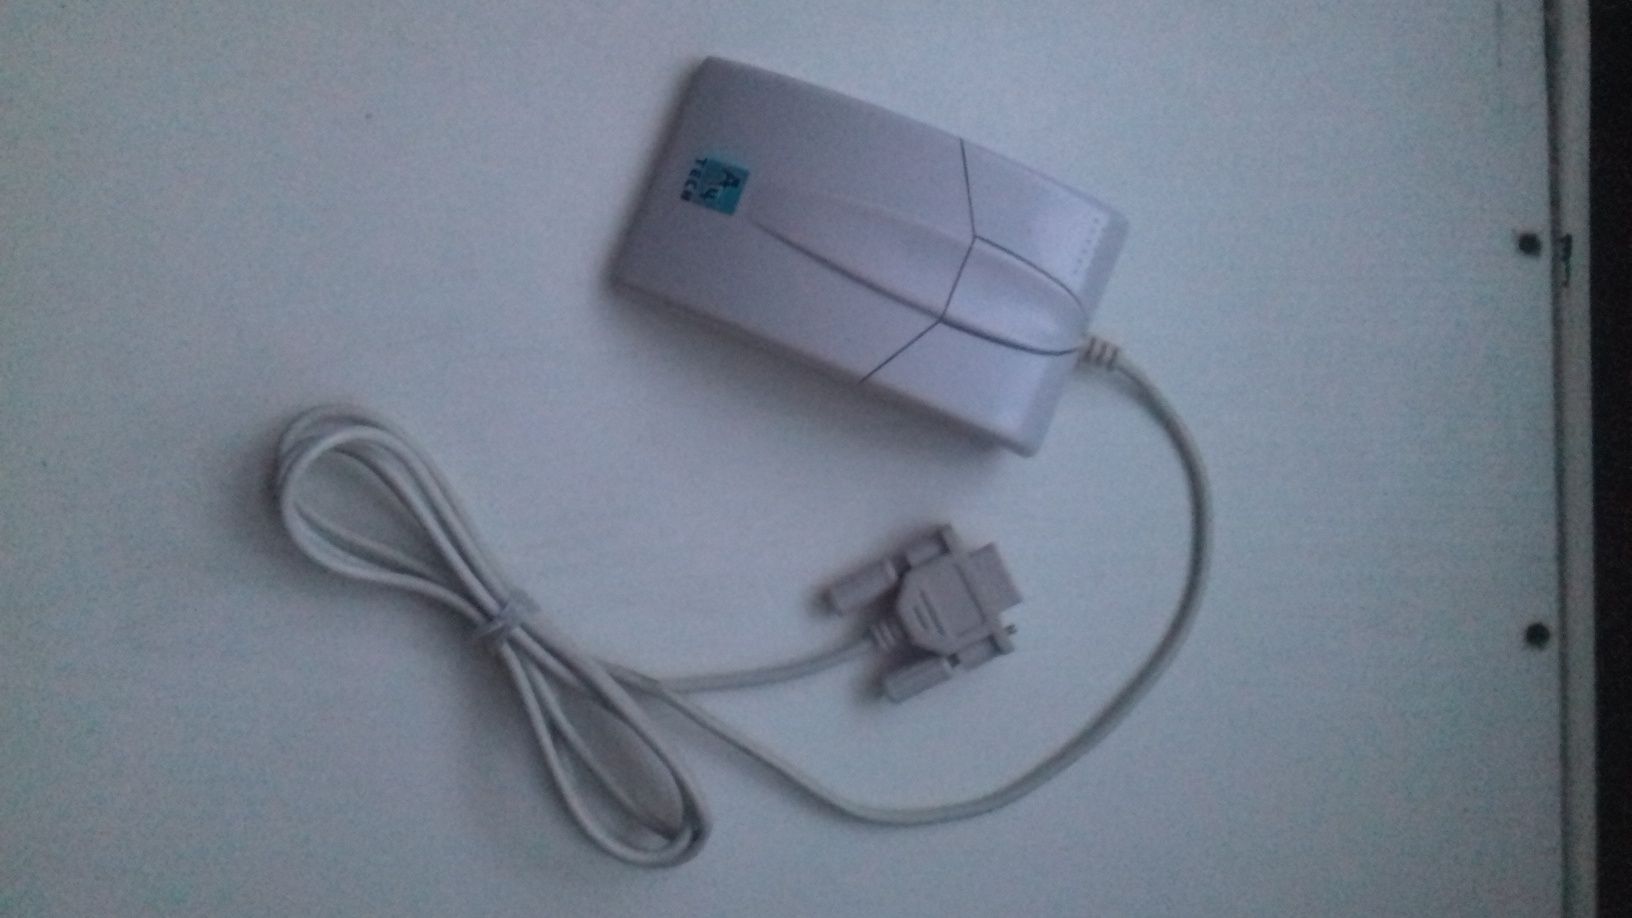 Retro mysz kulkowa szeregowa COM RS-232marki A4 Tech